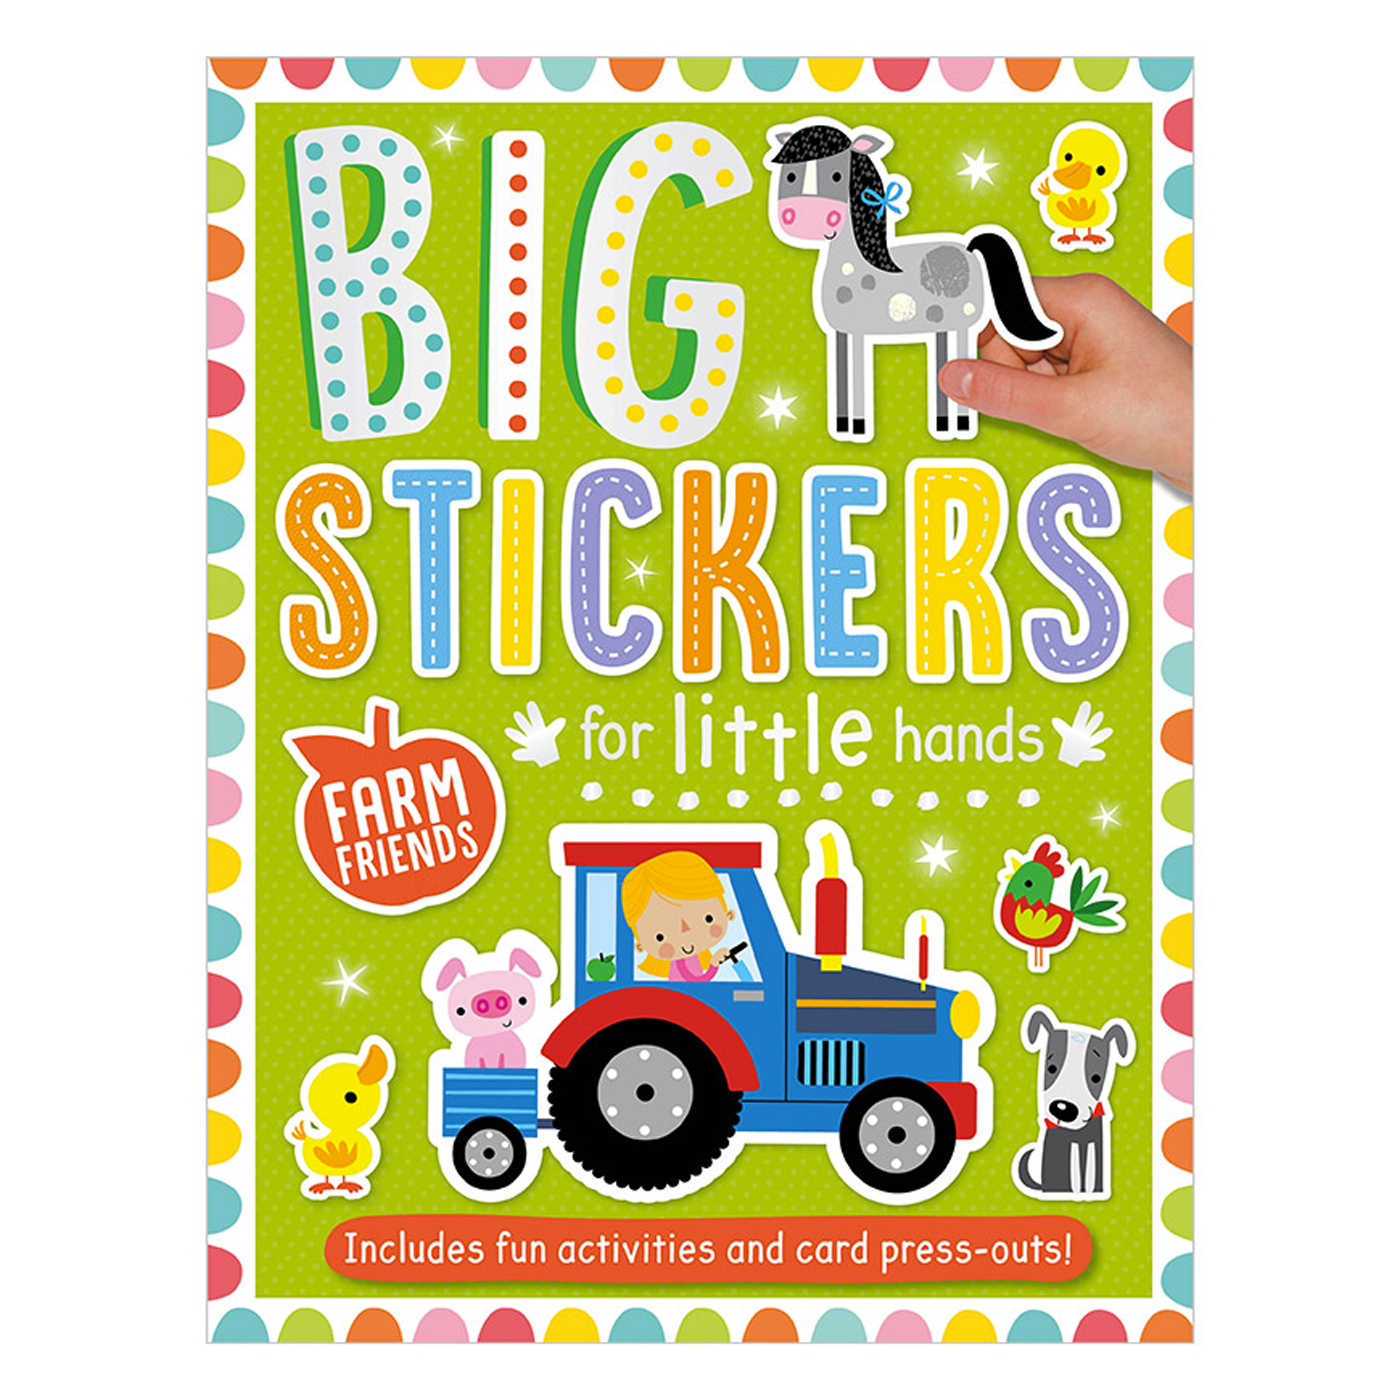  Big Stickers for Little Hands Farm Friends